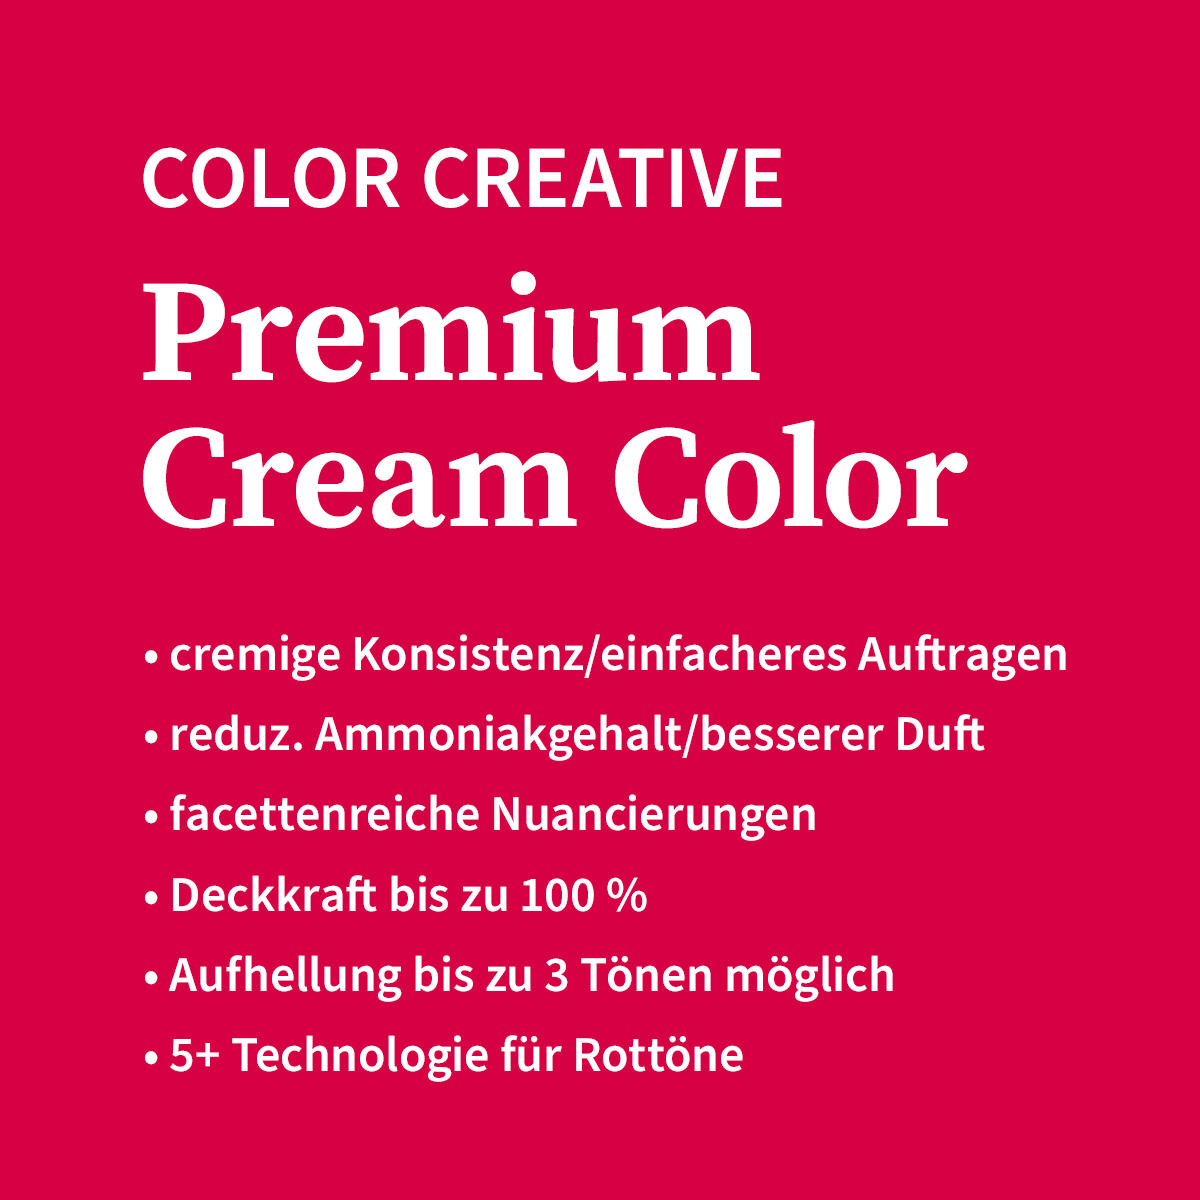 Basler Color Creative Premium Cream Color 12/1 ceniza rubia extra, tubo 60 ml - 4